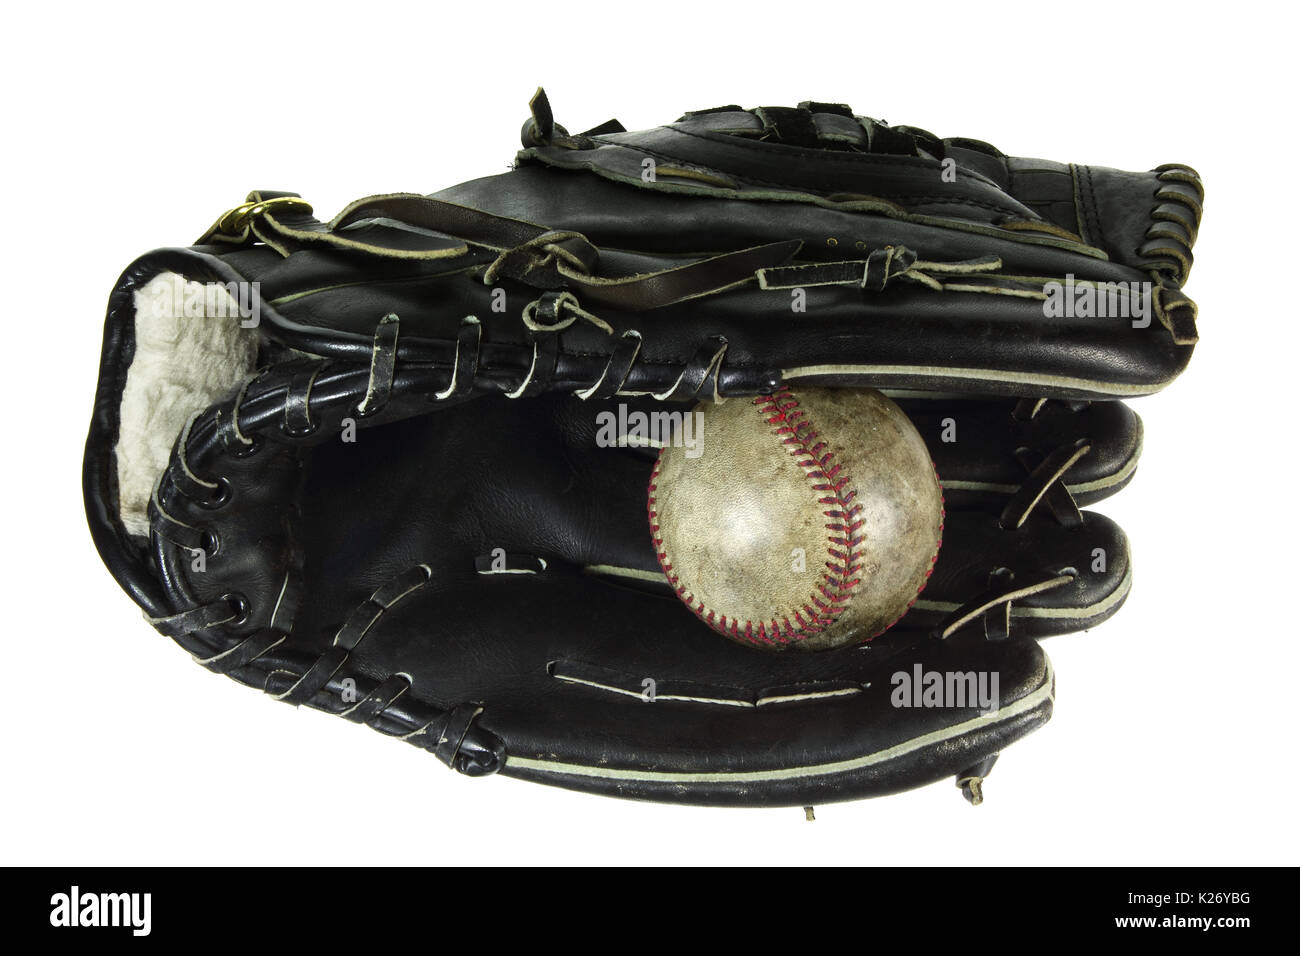 Baseball Glove and Ball on White Background Stock Photo